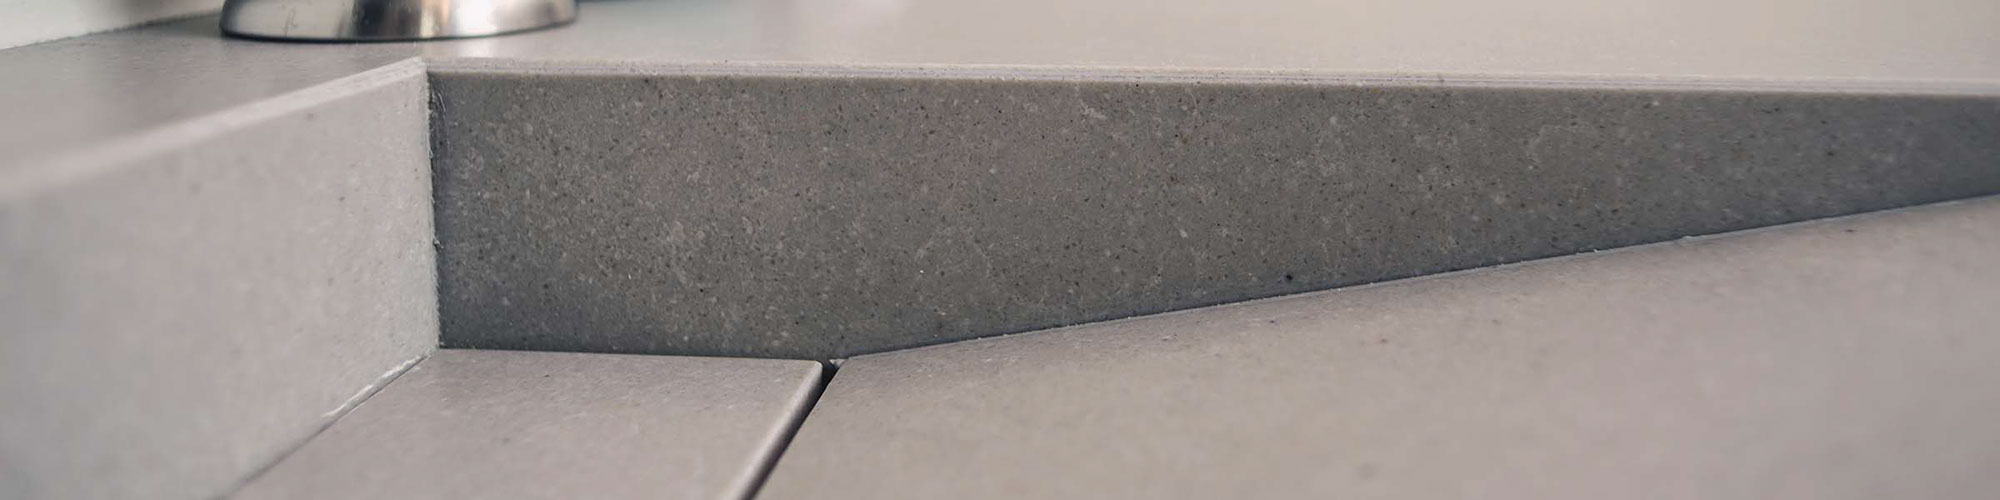 Closeup of gray quartz bathroom vanity and sink that looks like concrete.